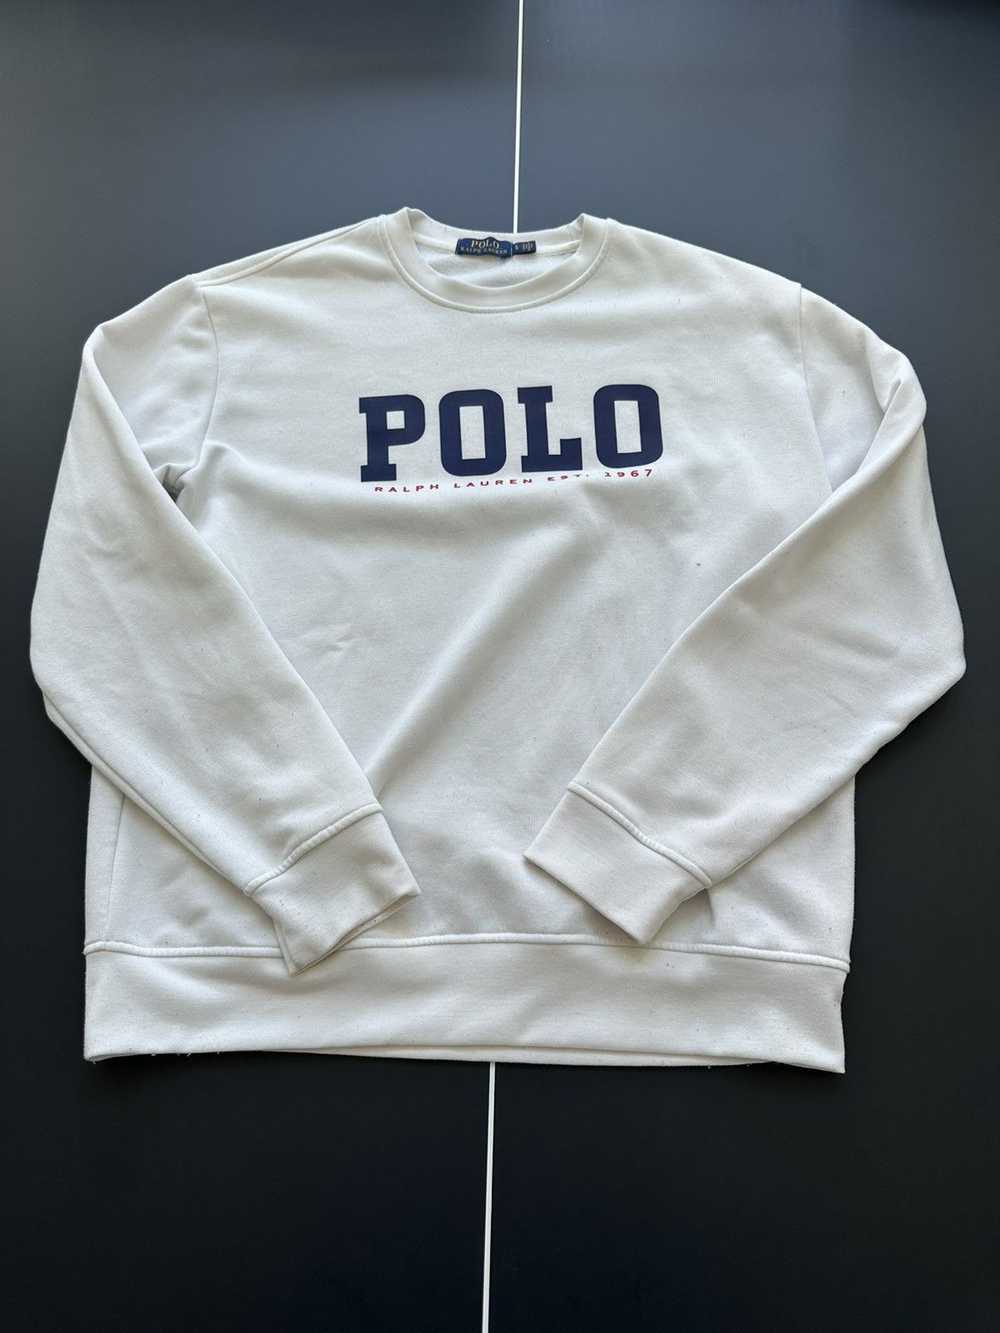 Polo Ralph Lauren Polo sweater - image 1